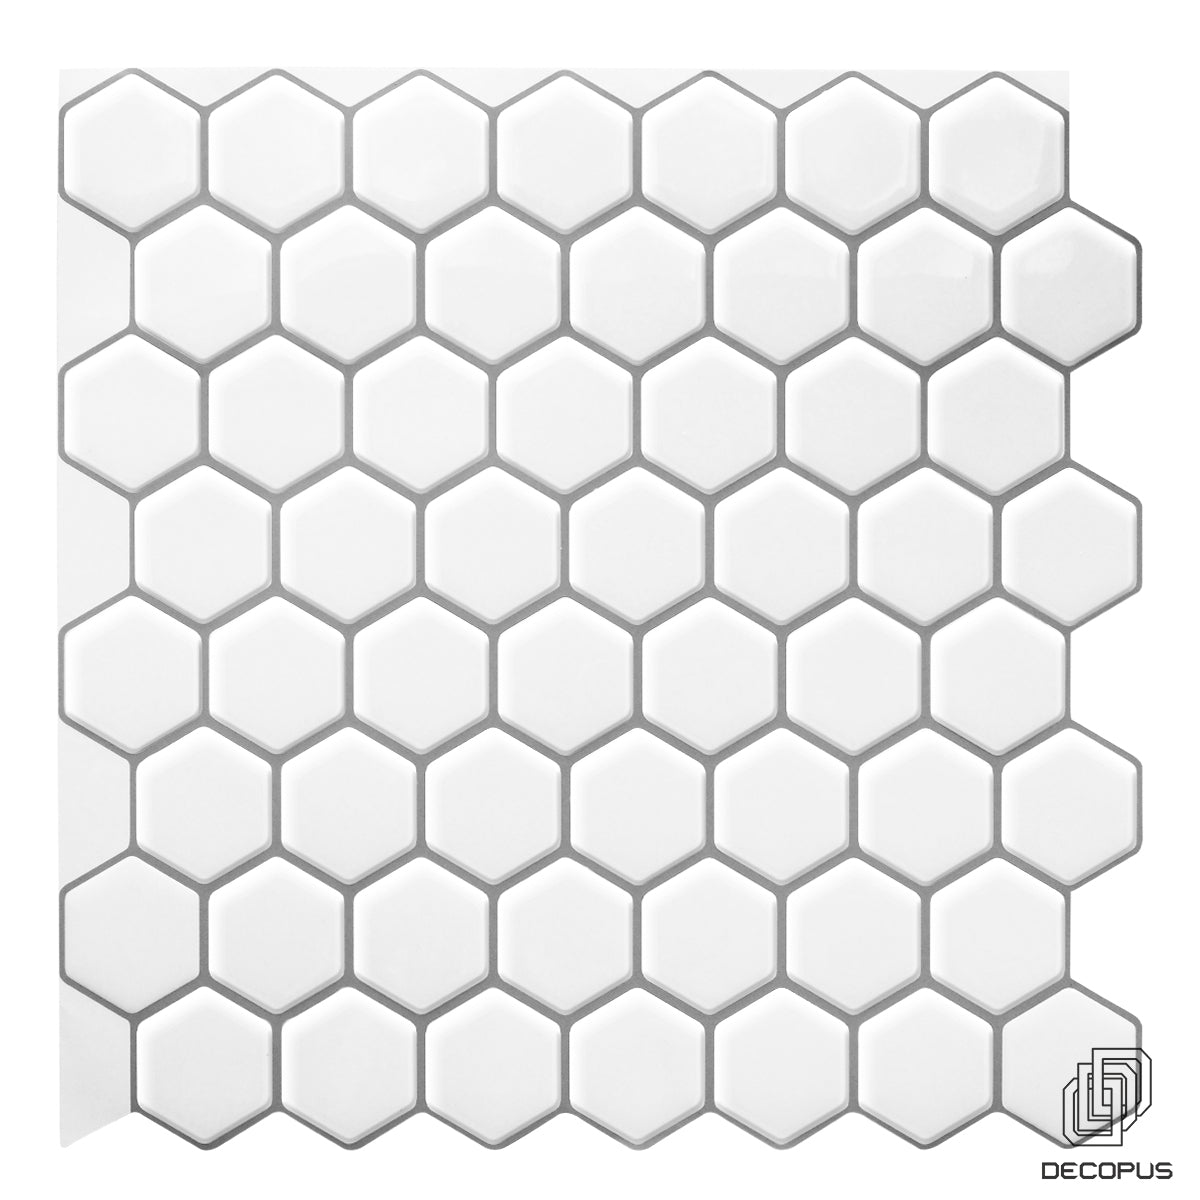 Decopus 3D MarbleTile Backsplash Peel and Stick Vinyl (Hexagon - Mono Black 10pc/Pack) for Kitchen & Bathroom with Marble Printing